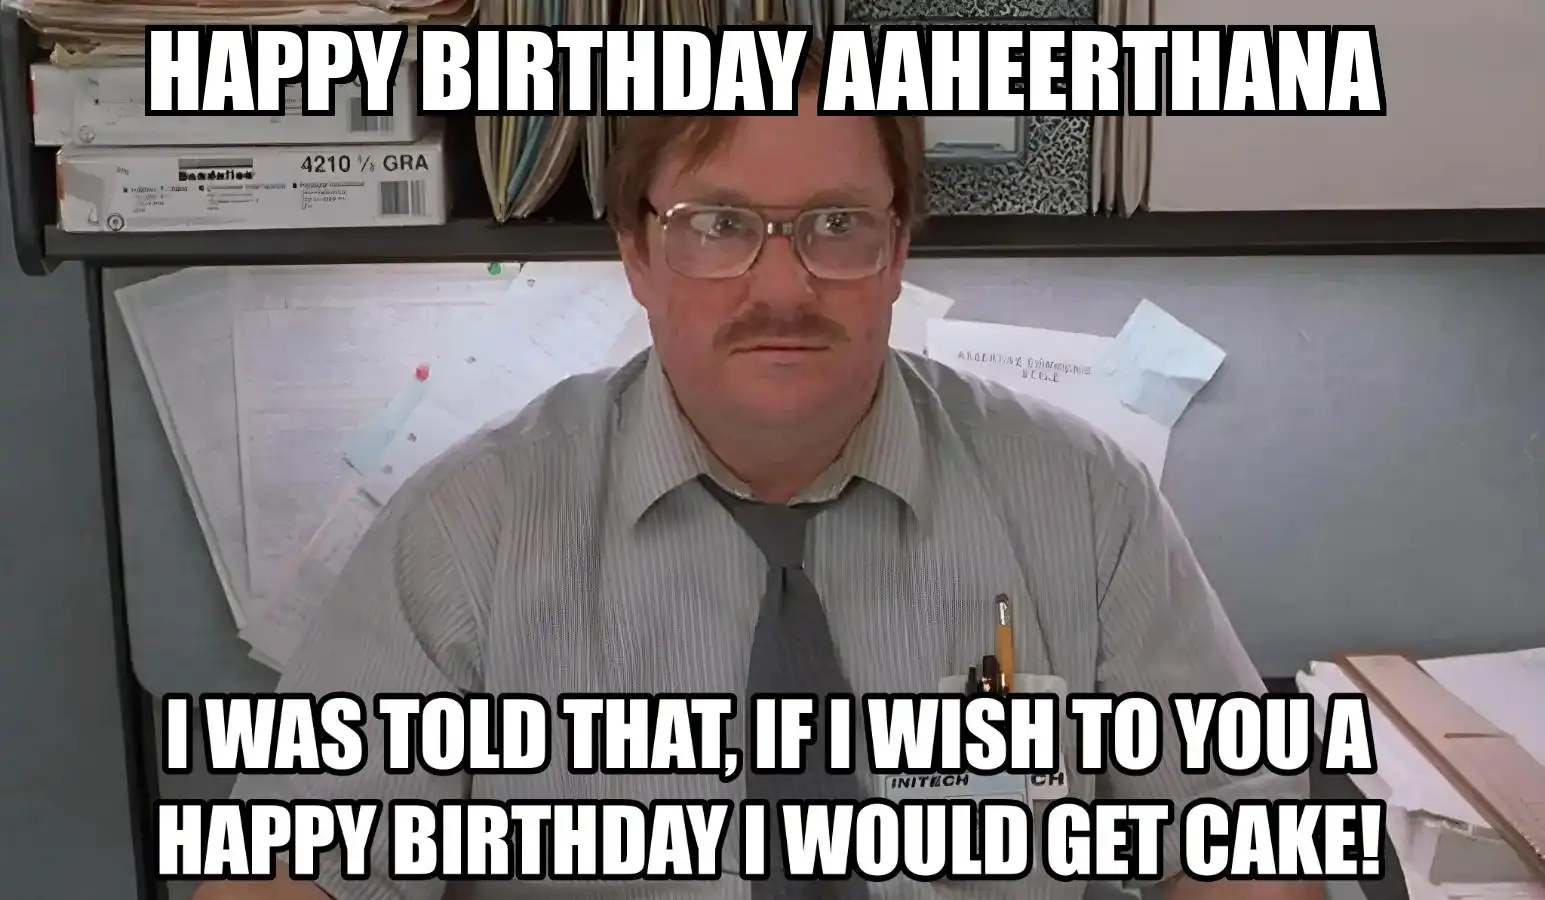 Happy Birthday Aaheerthana I Would Get A Cake Meme